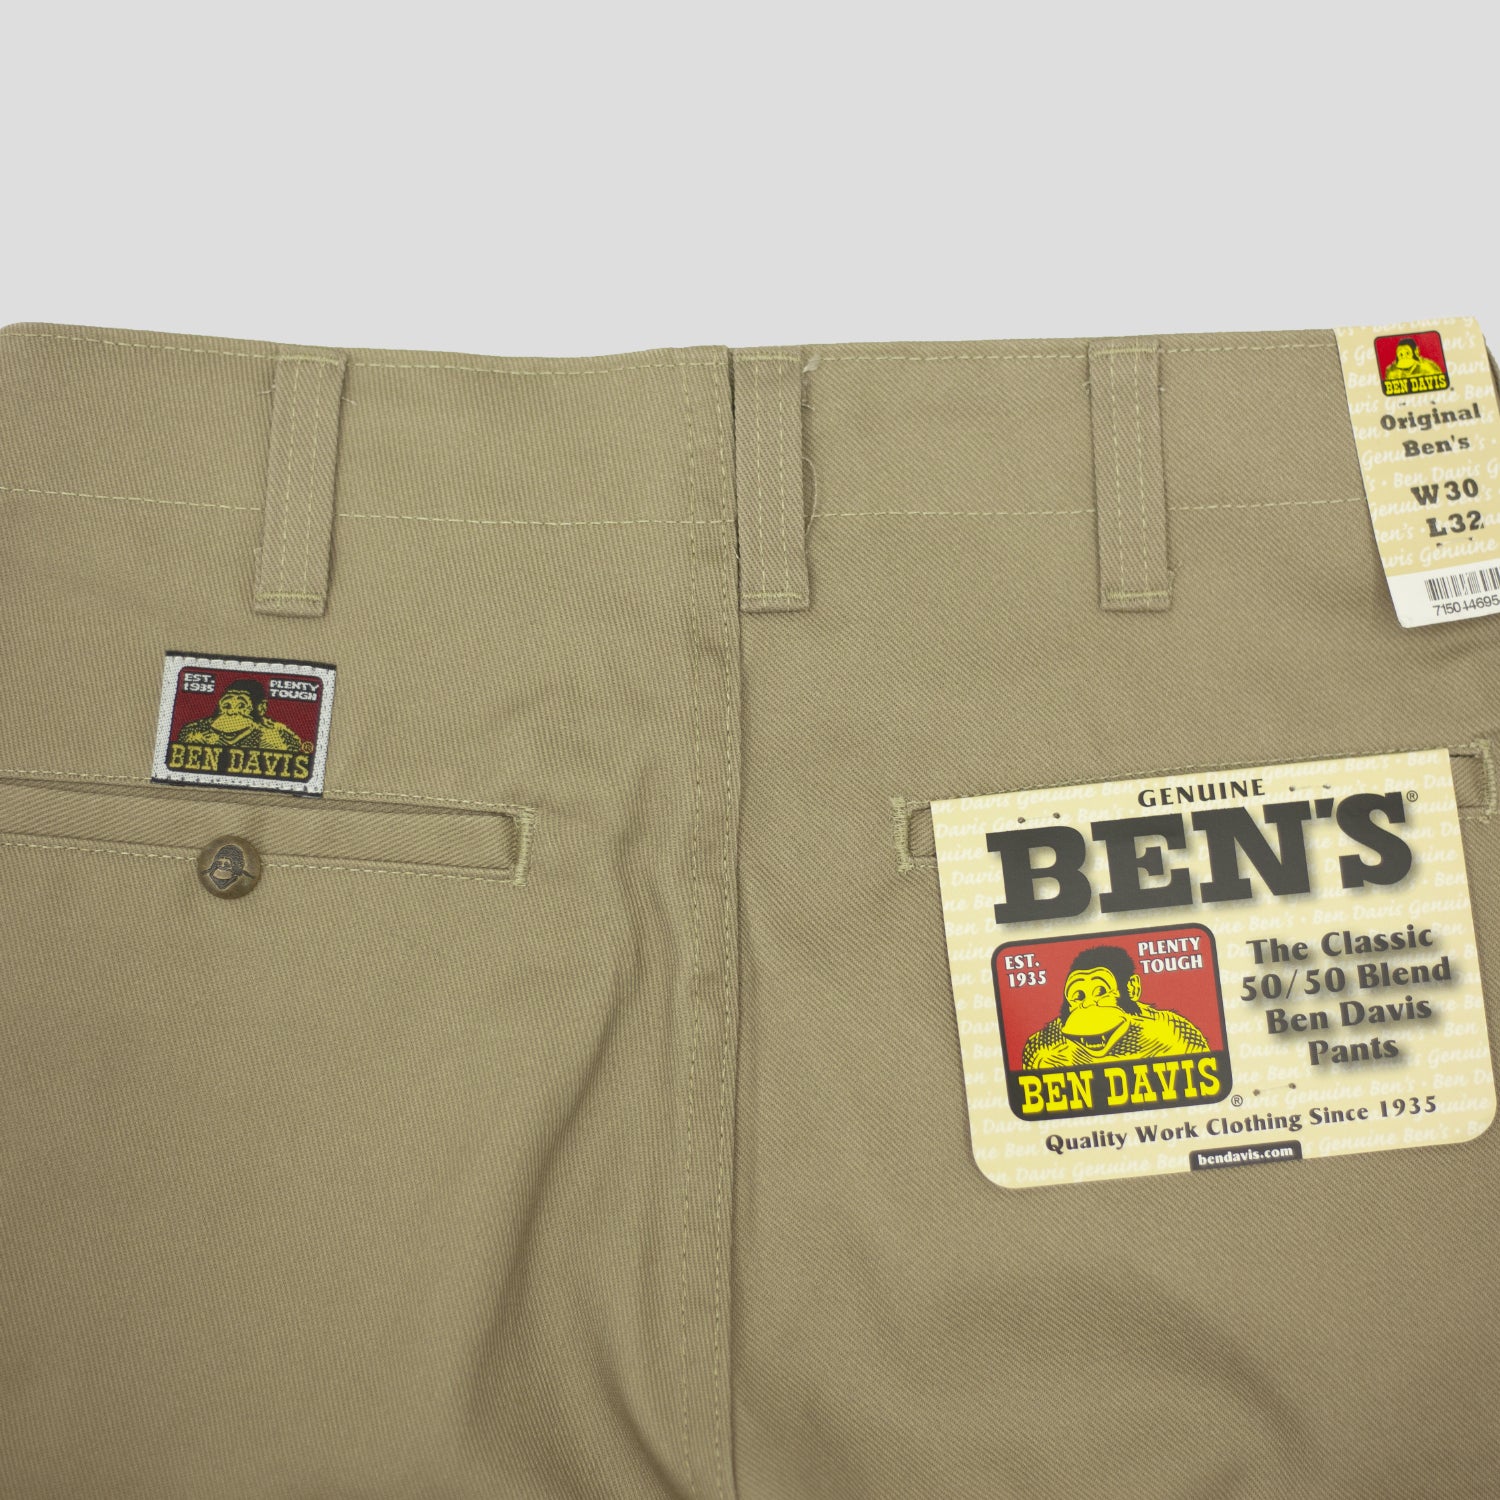 Ben Davis Original Ben's Pant - Khaki